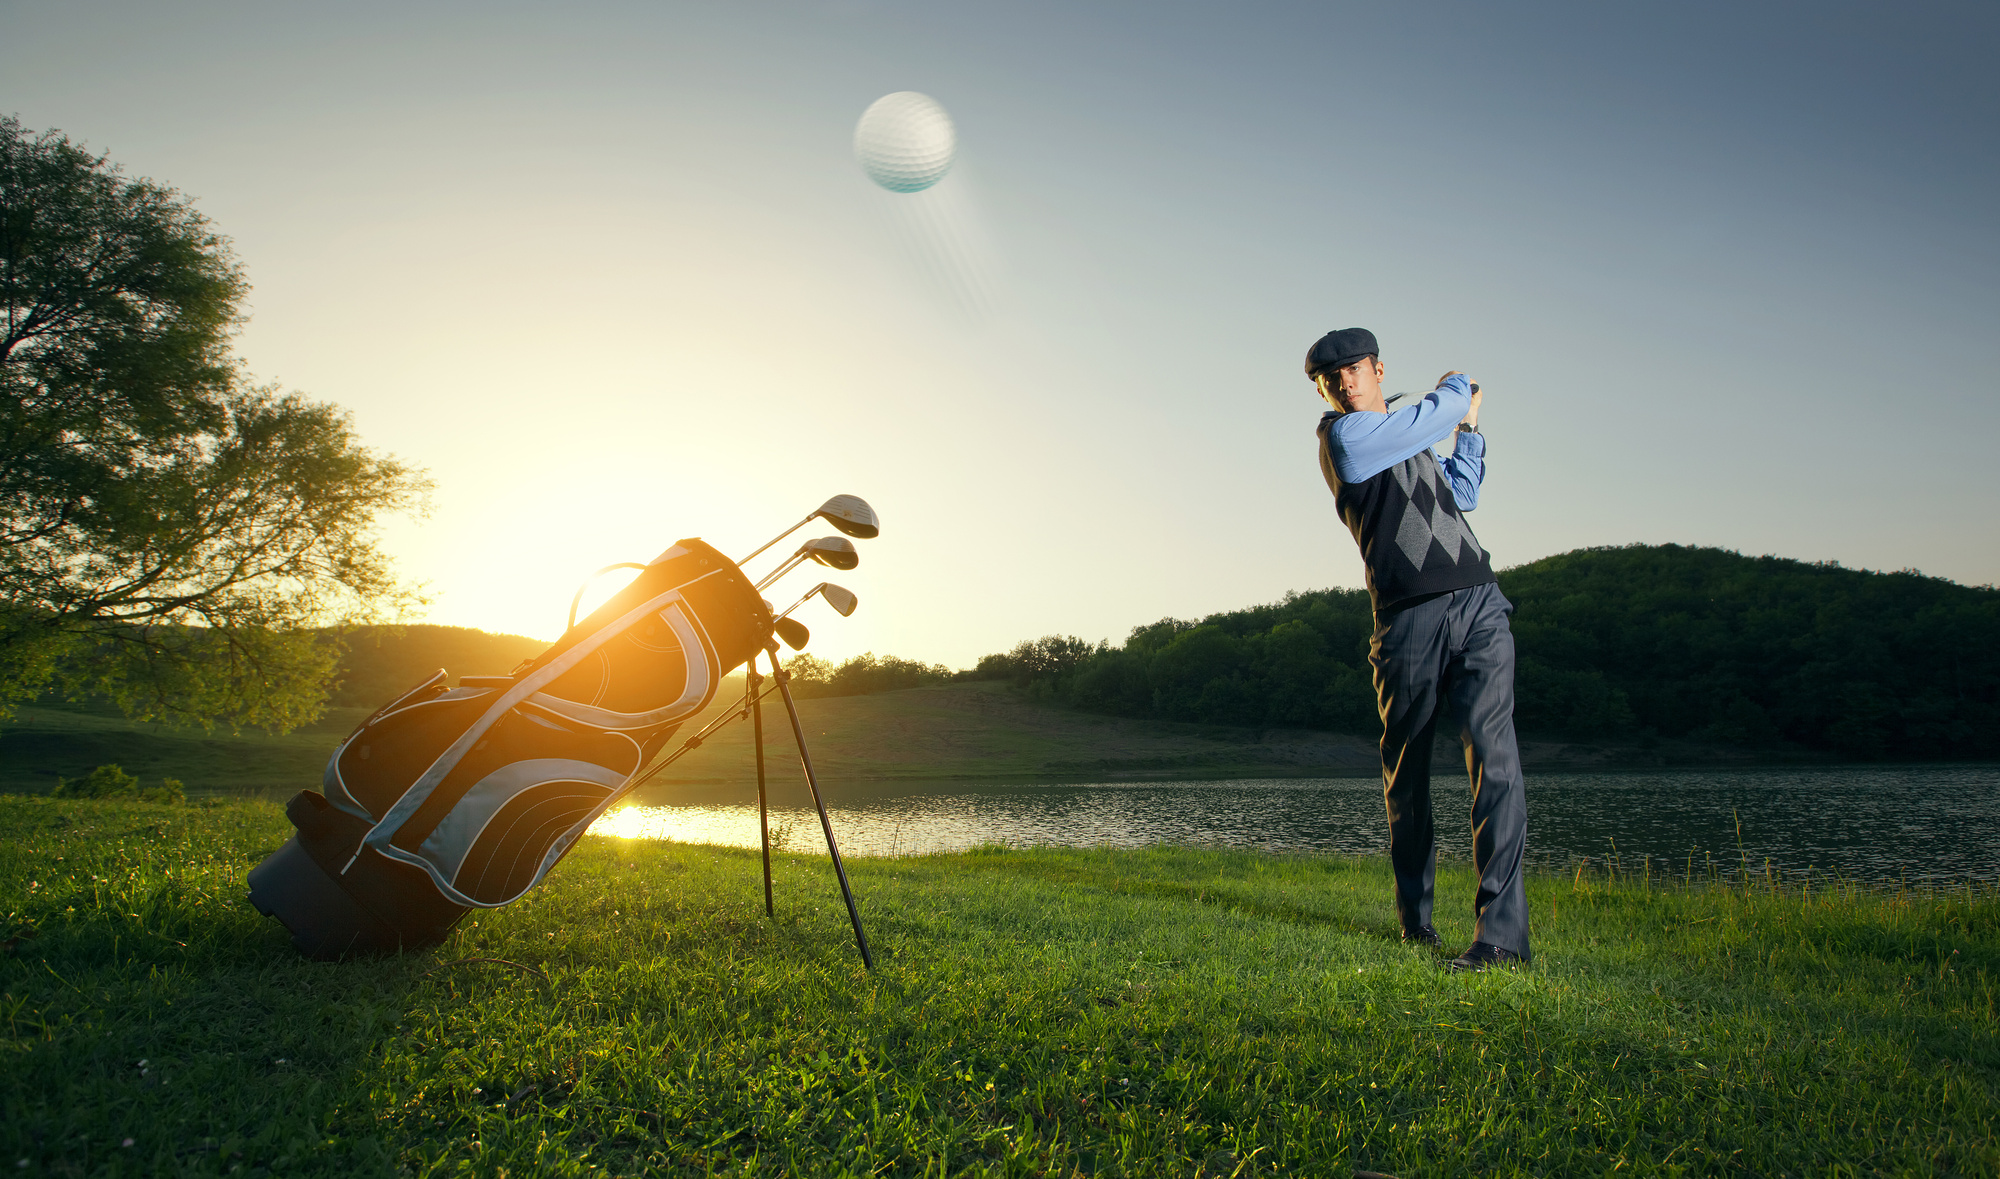 Golf Scramble Rules: How to Plan a Scramble Tournament